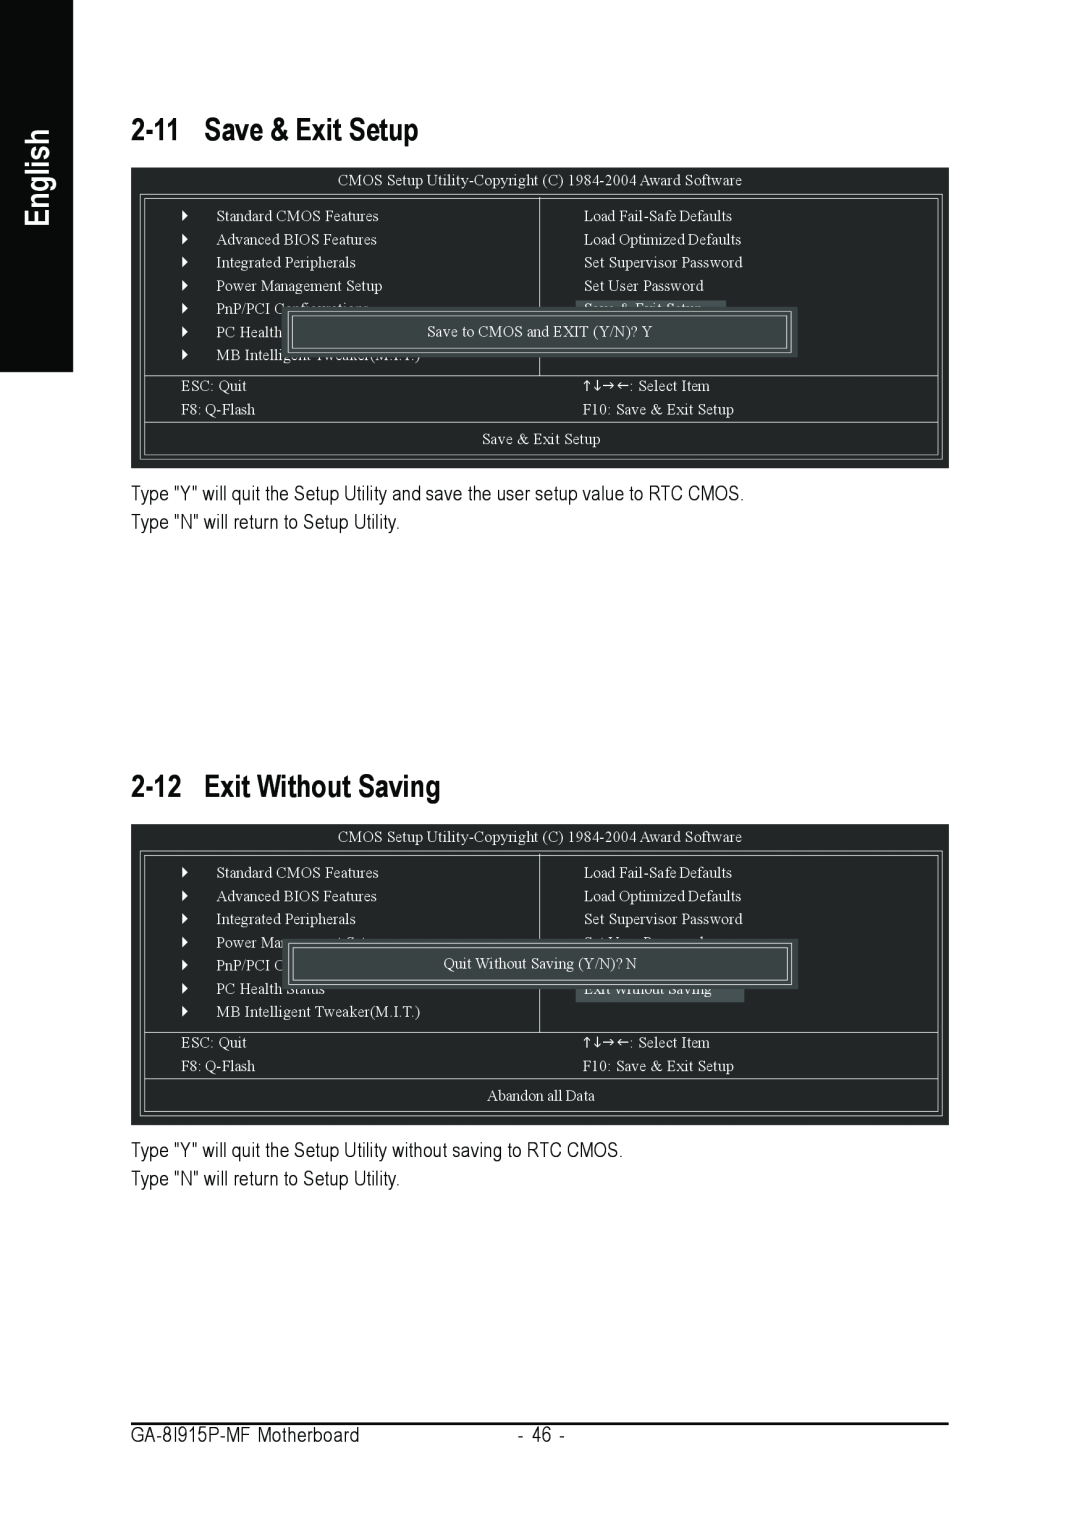 Gigabyte GA-8I915P-MF user manual Save & Exit Setup, Exit Without Saving, English 